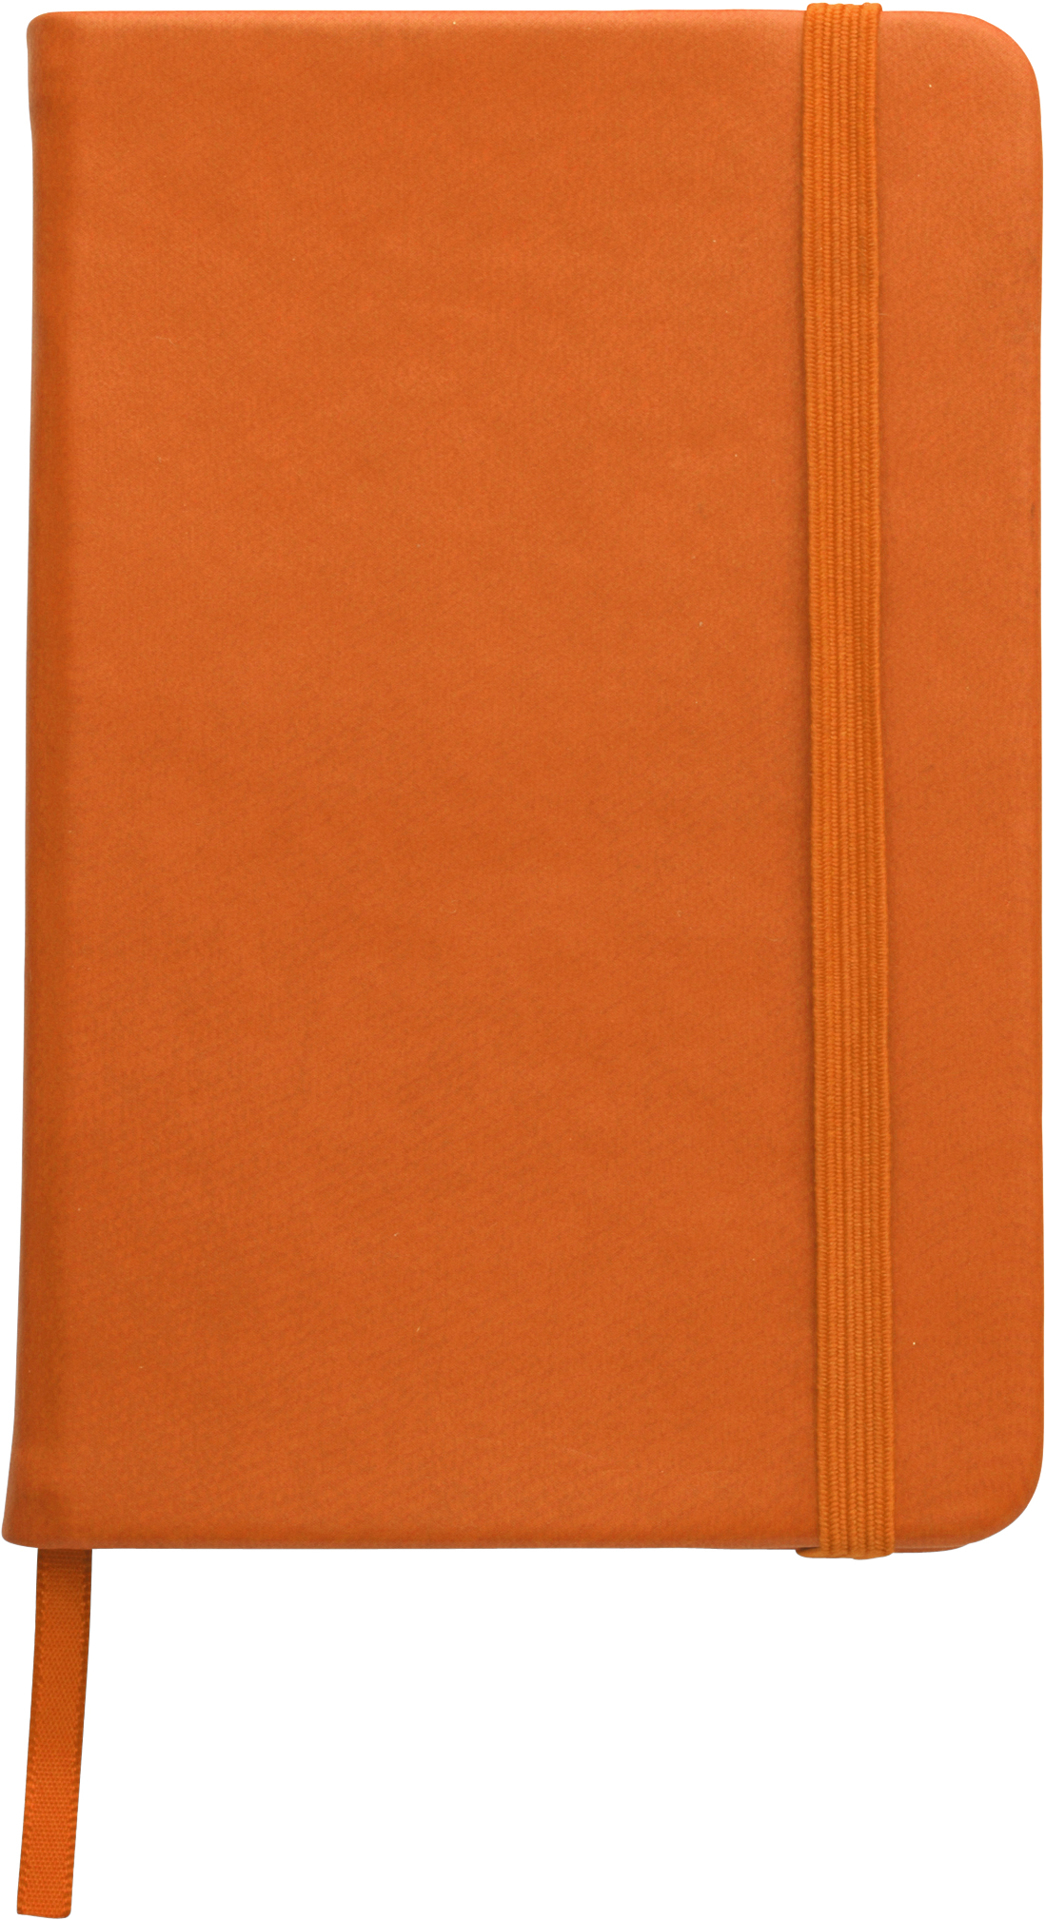 A6 Notebook with soft PU cover in orange